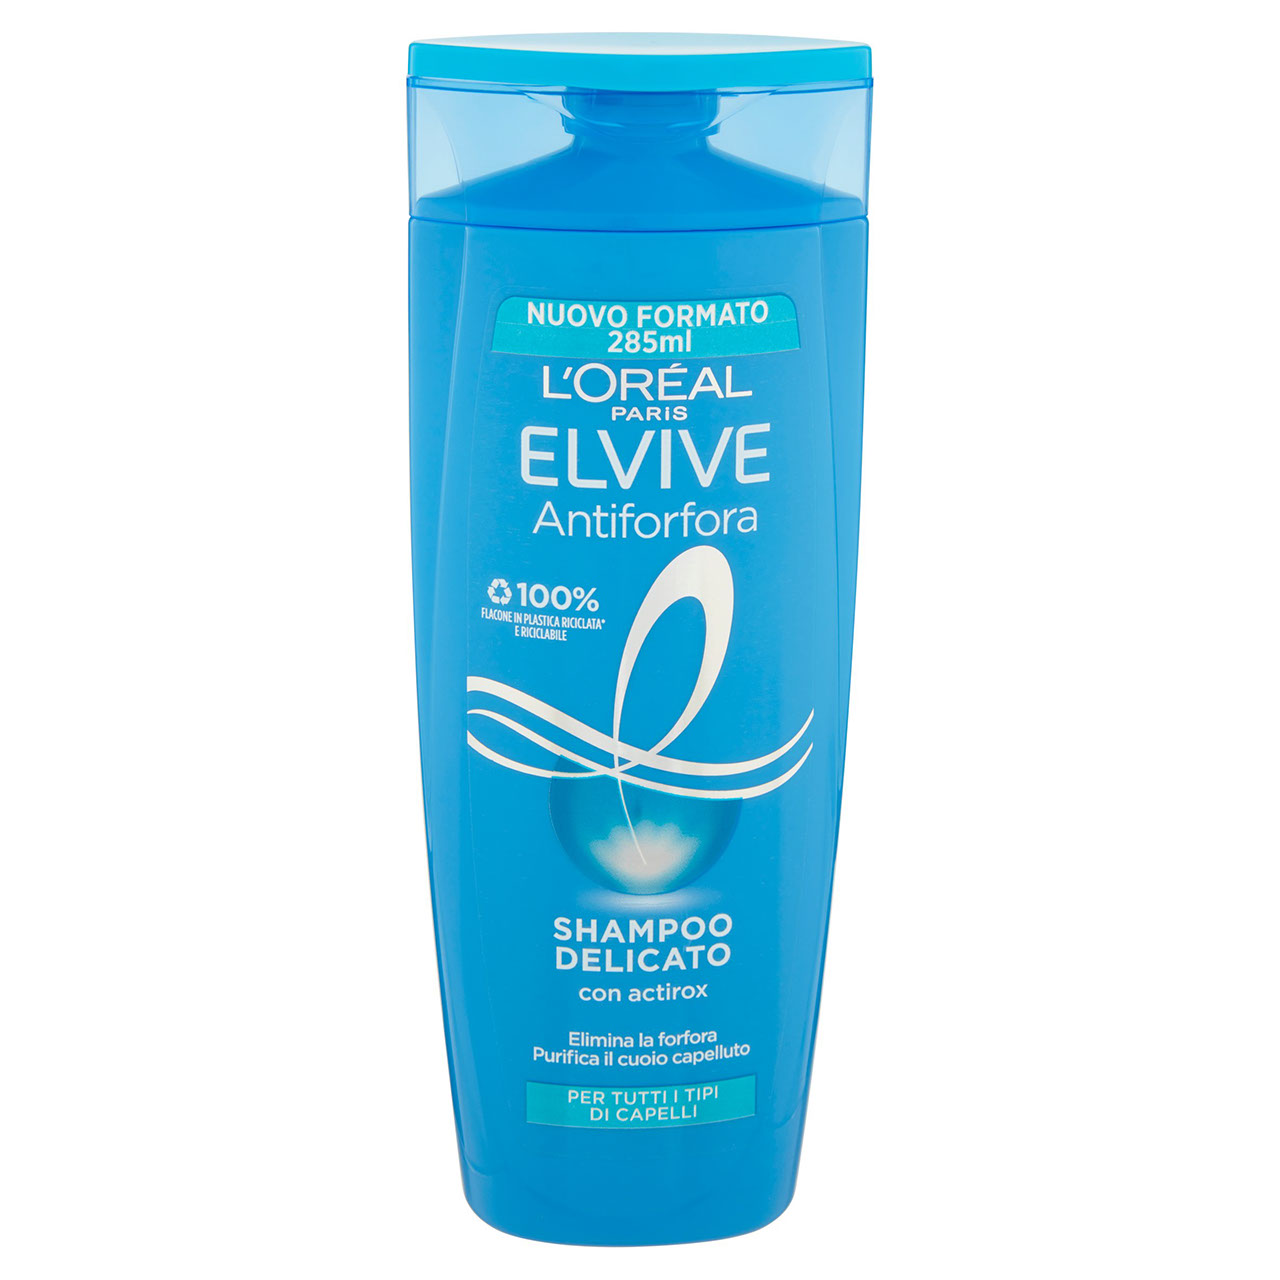 Shampoo Elvive Antiforfora, in vendita online